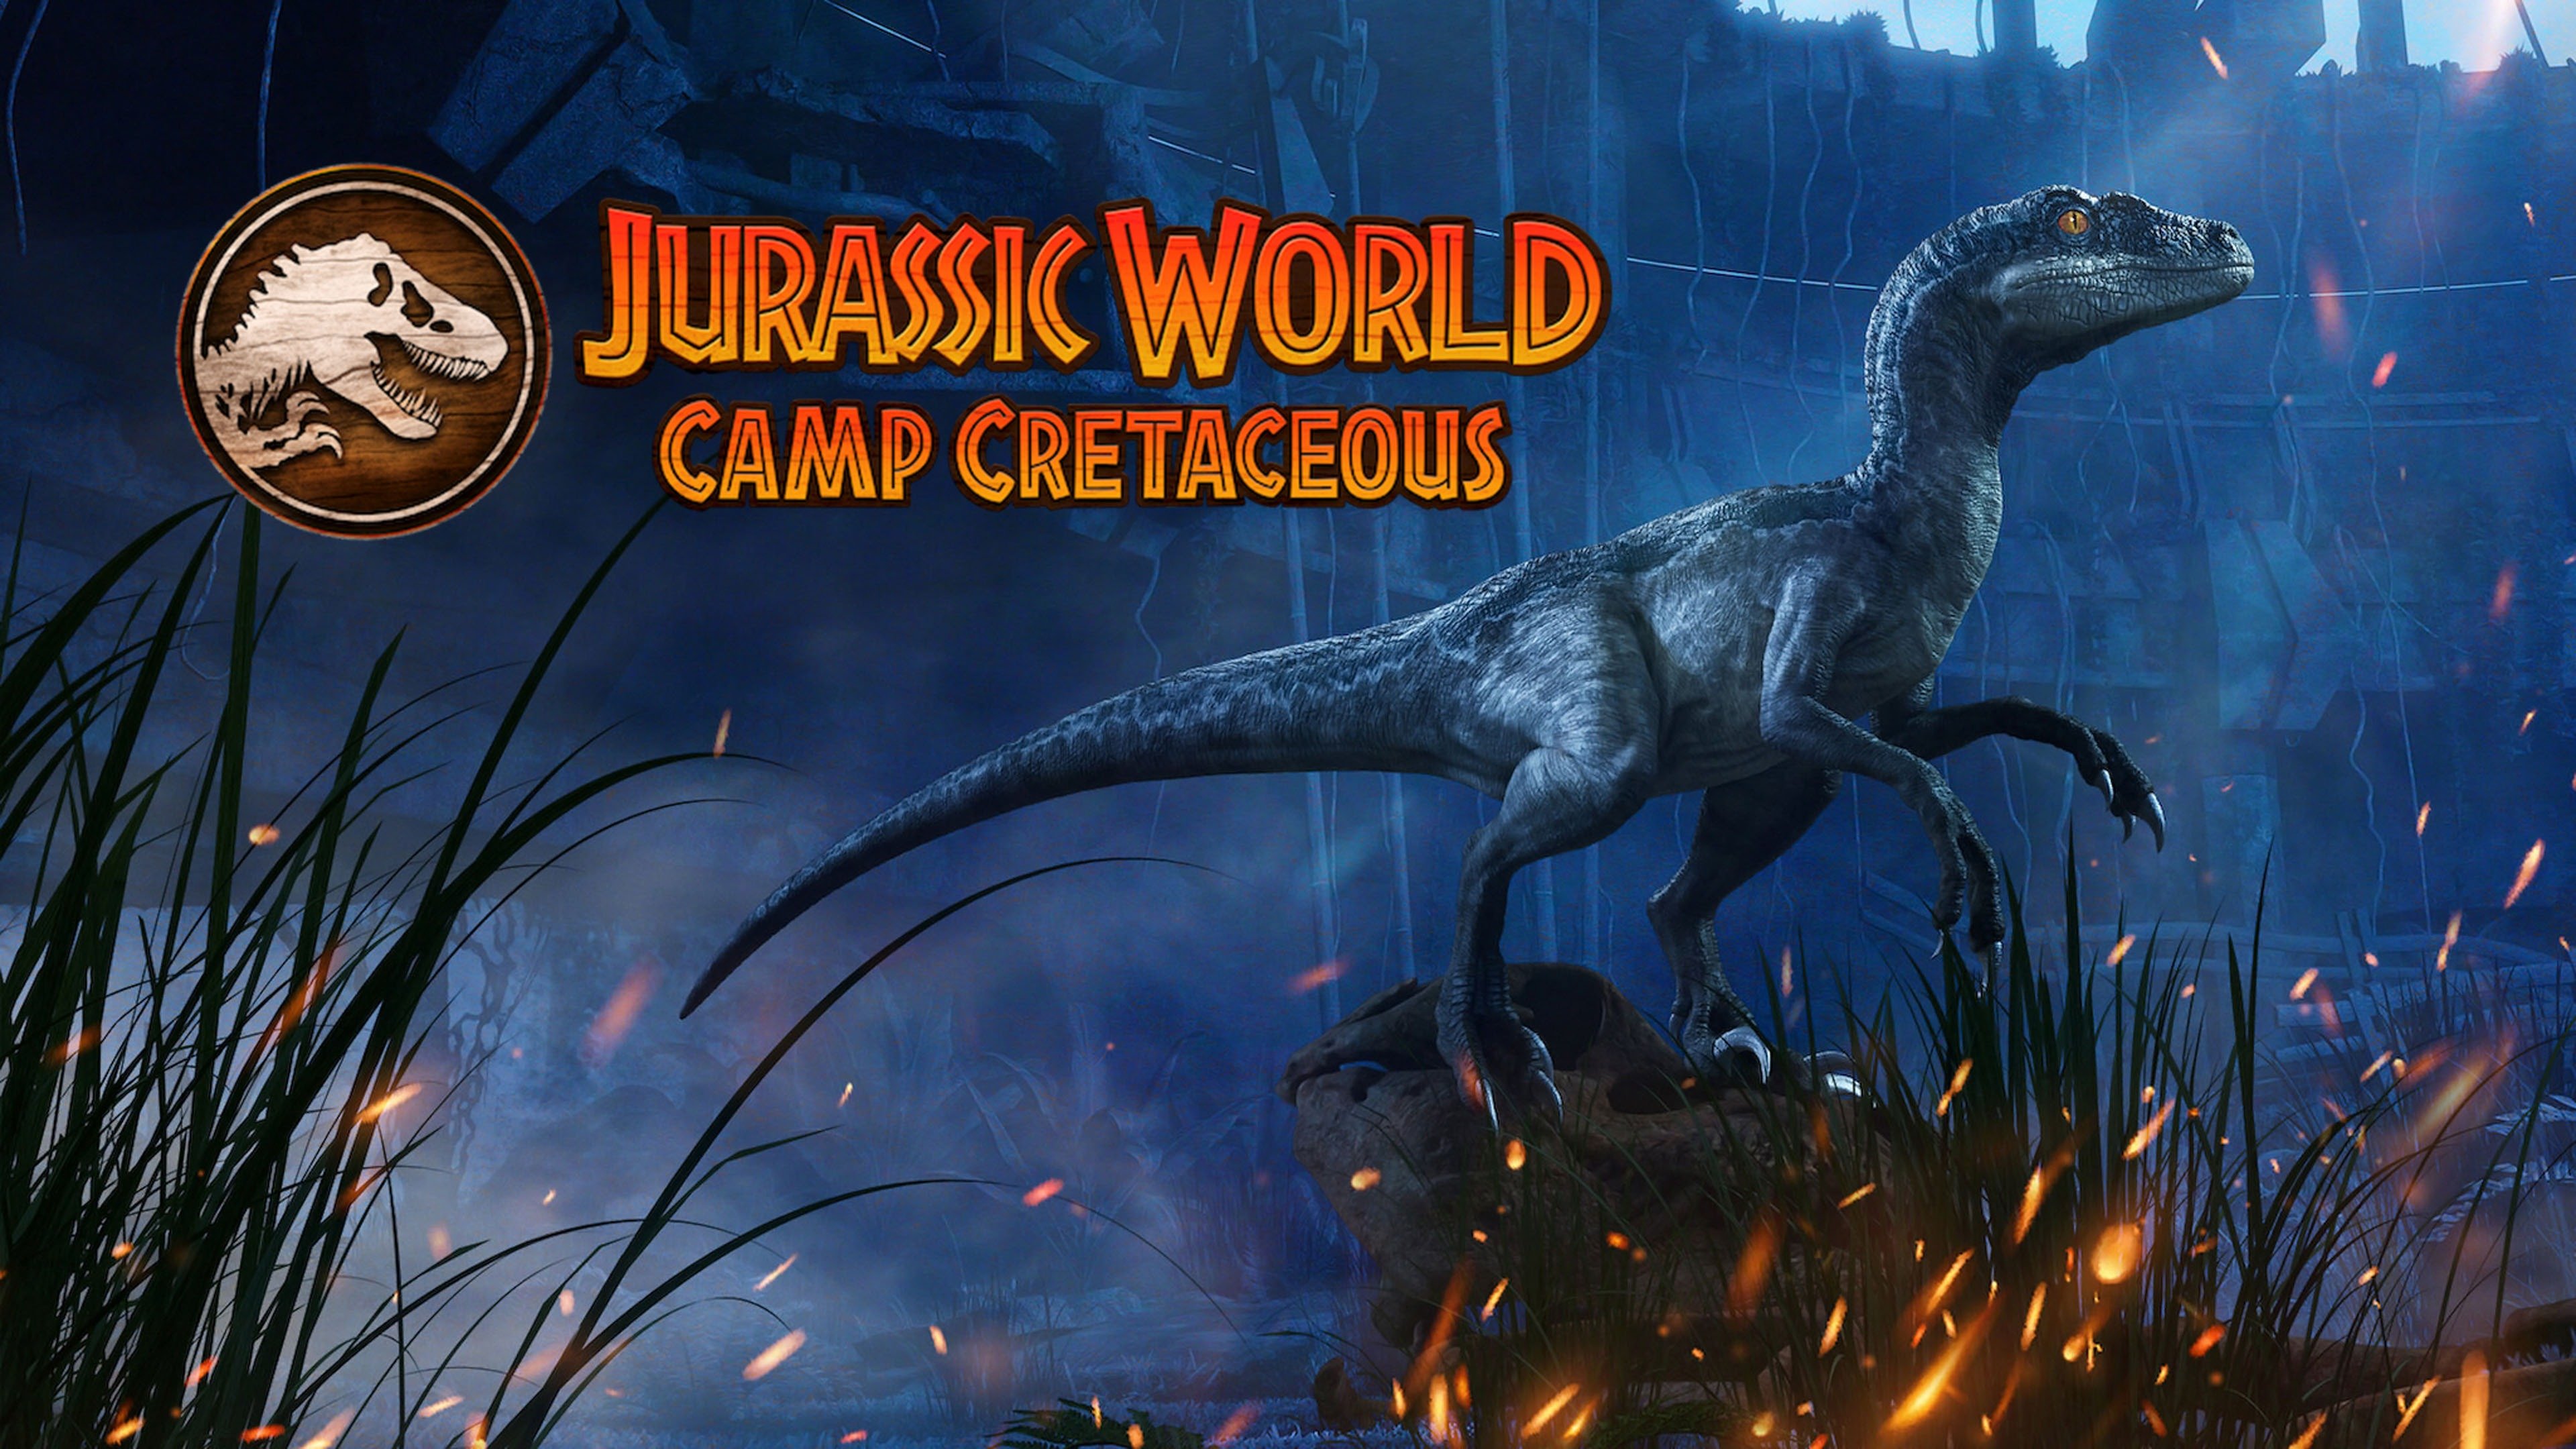 Camp cretaceous park jurassic Jurassic World: